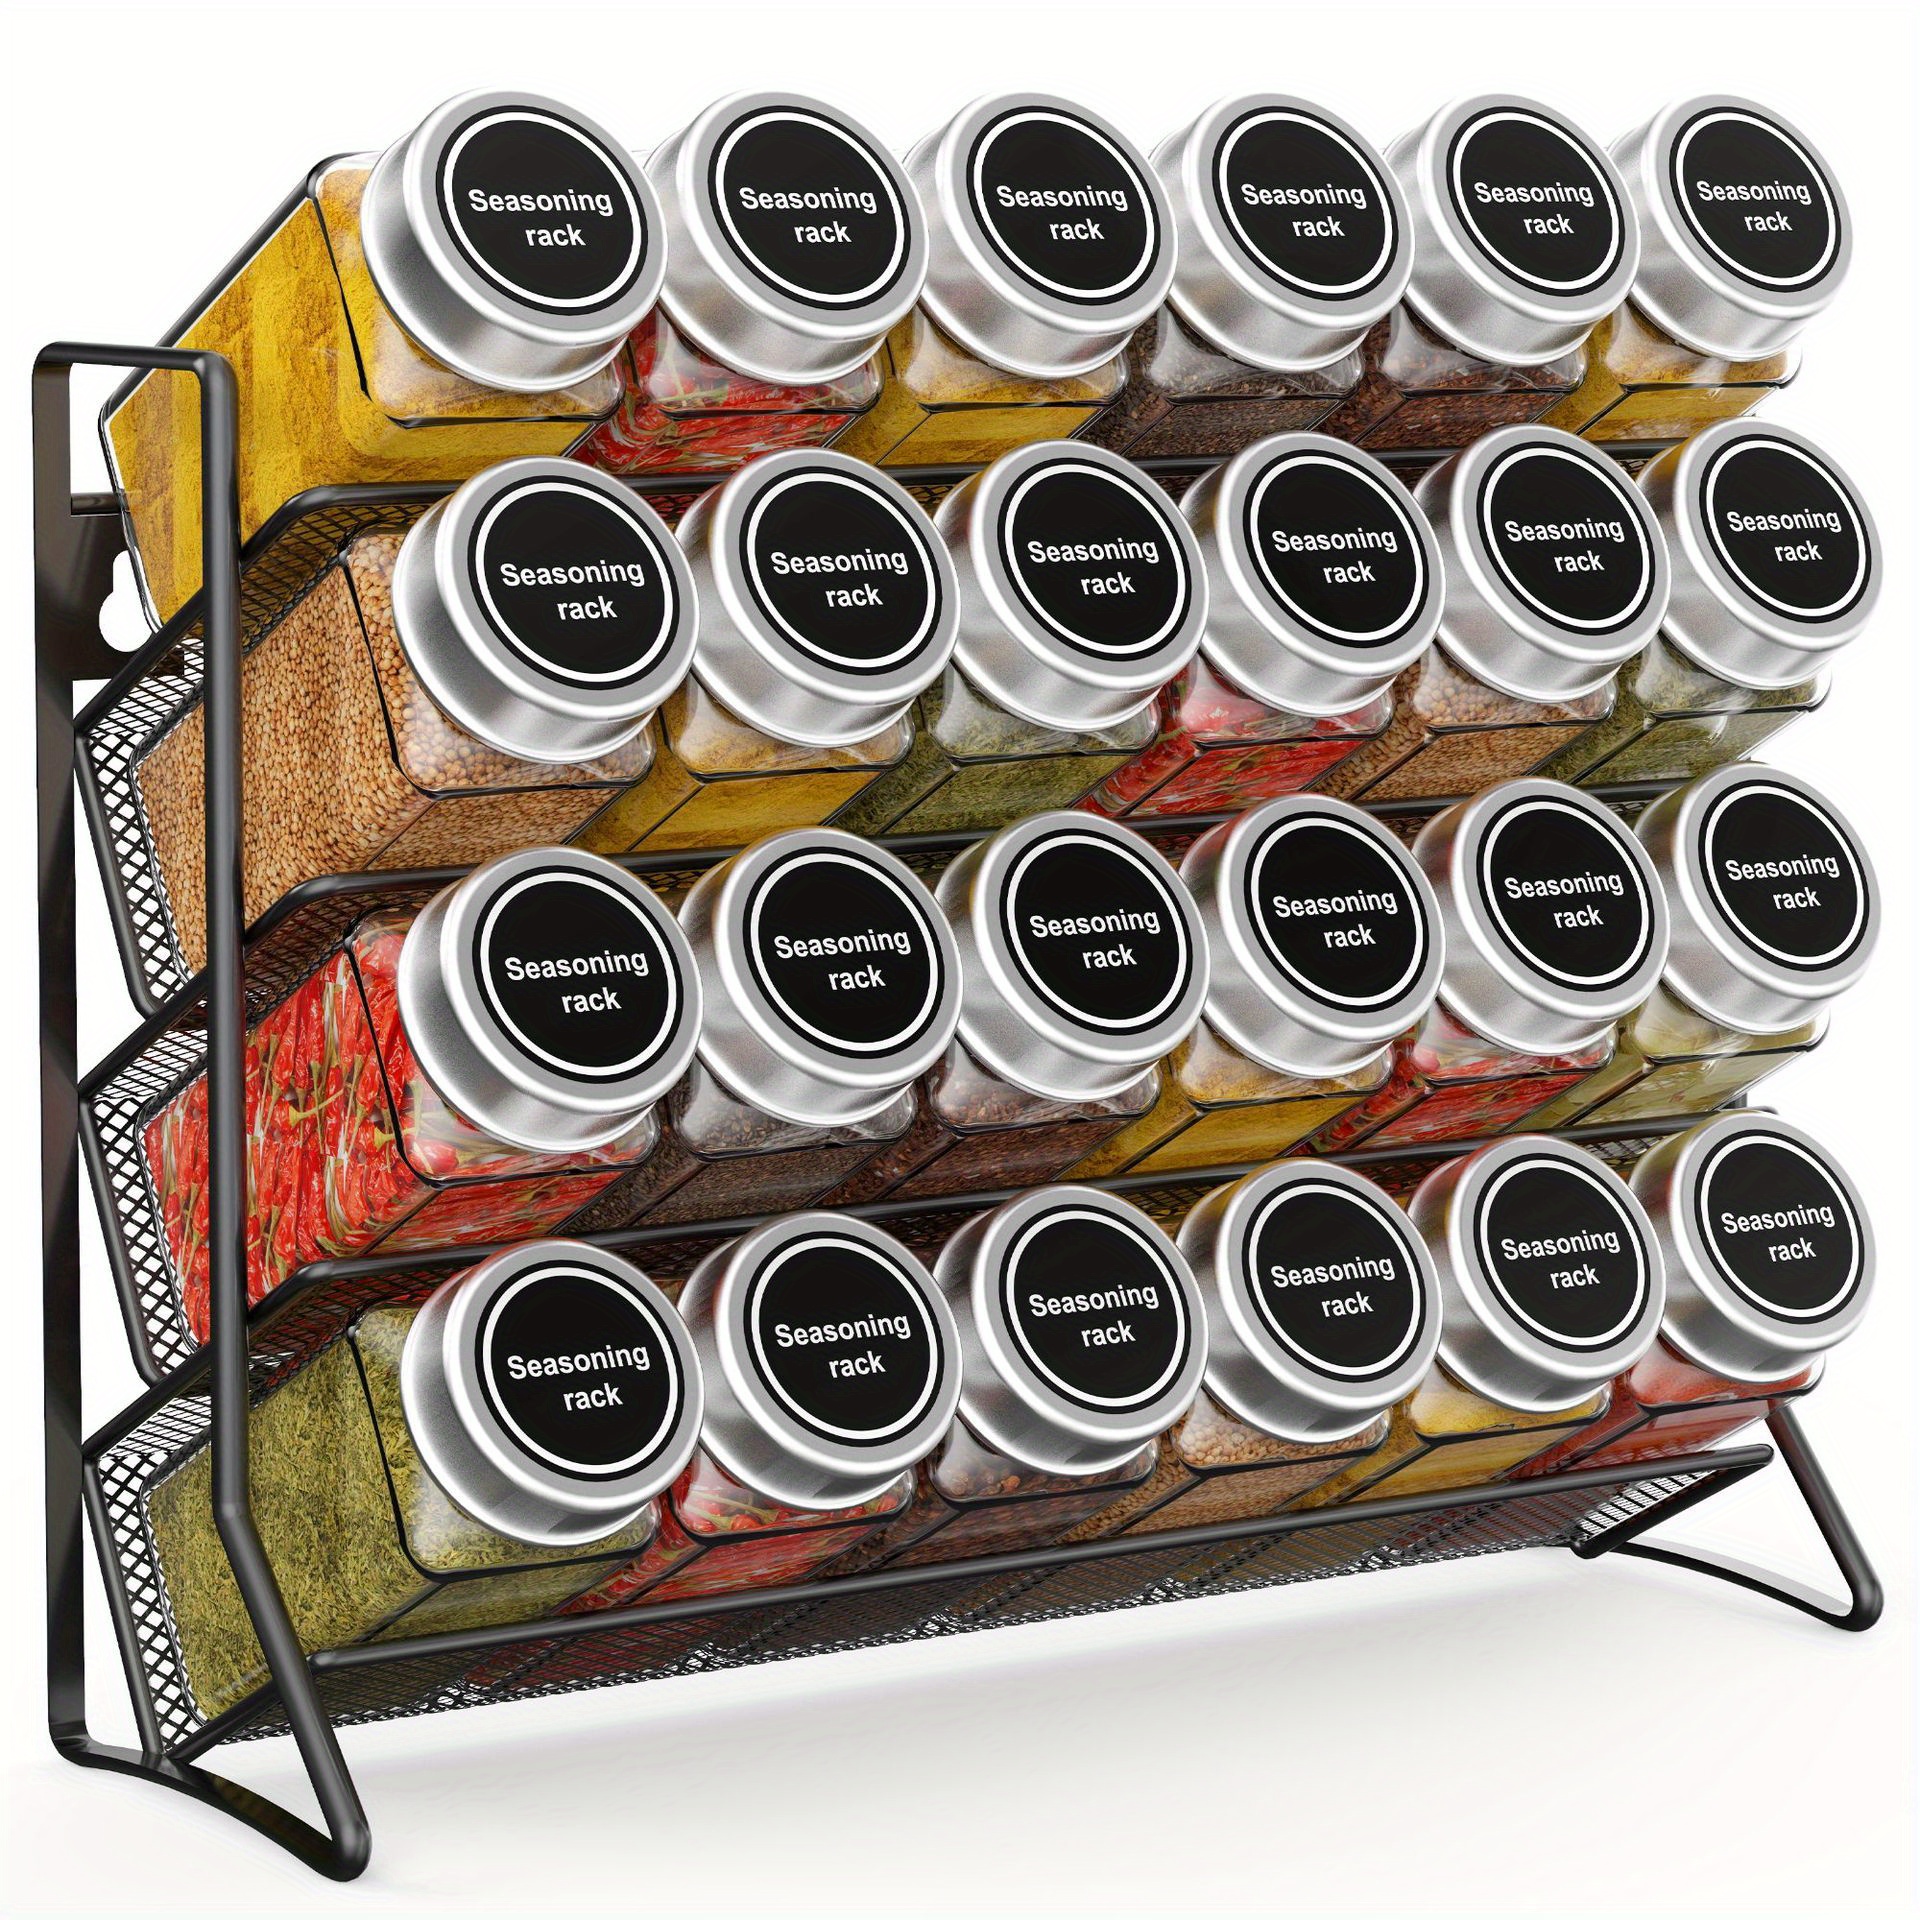 

Spice Rack Organizer For Kitchen - 4-tier Metal Countertop Spice Jar Holder, Multi-layer Seasoning Storage Shelf For Home & Restaurant Use, Kitchen Accessories - 1pc